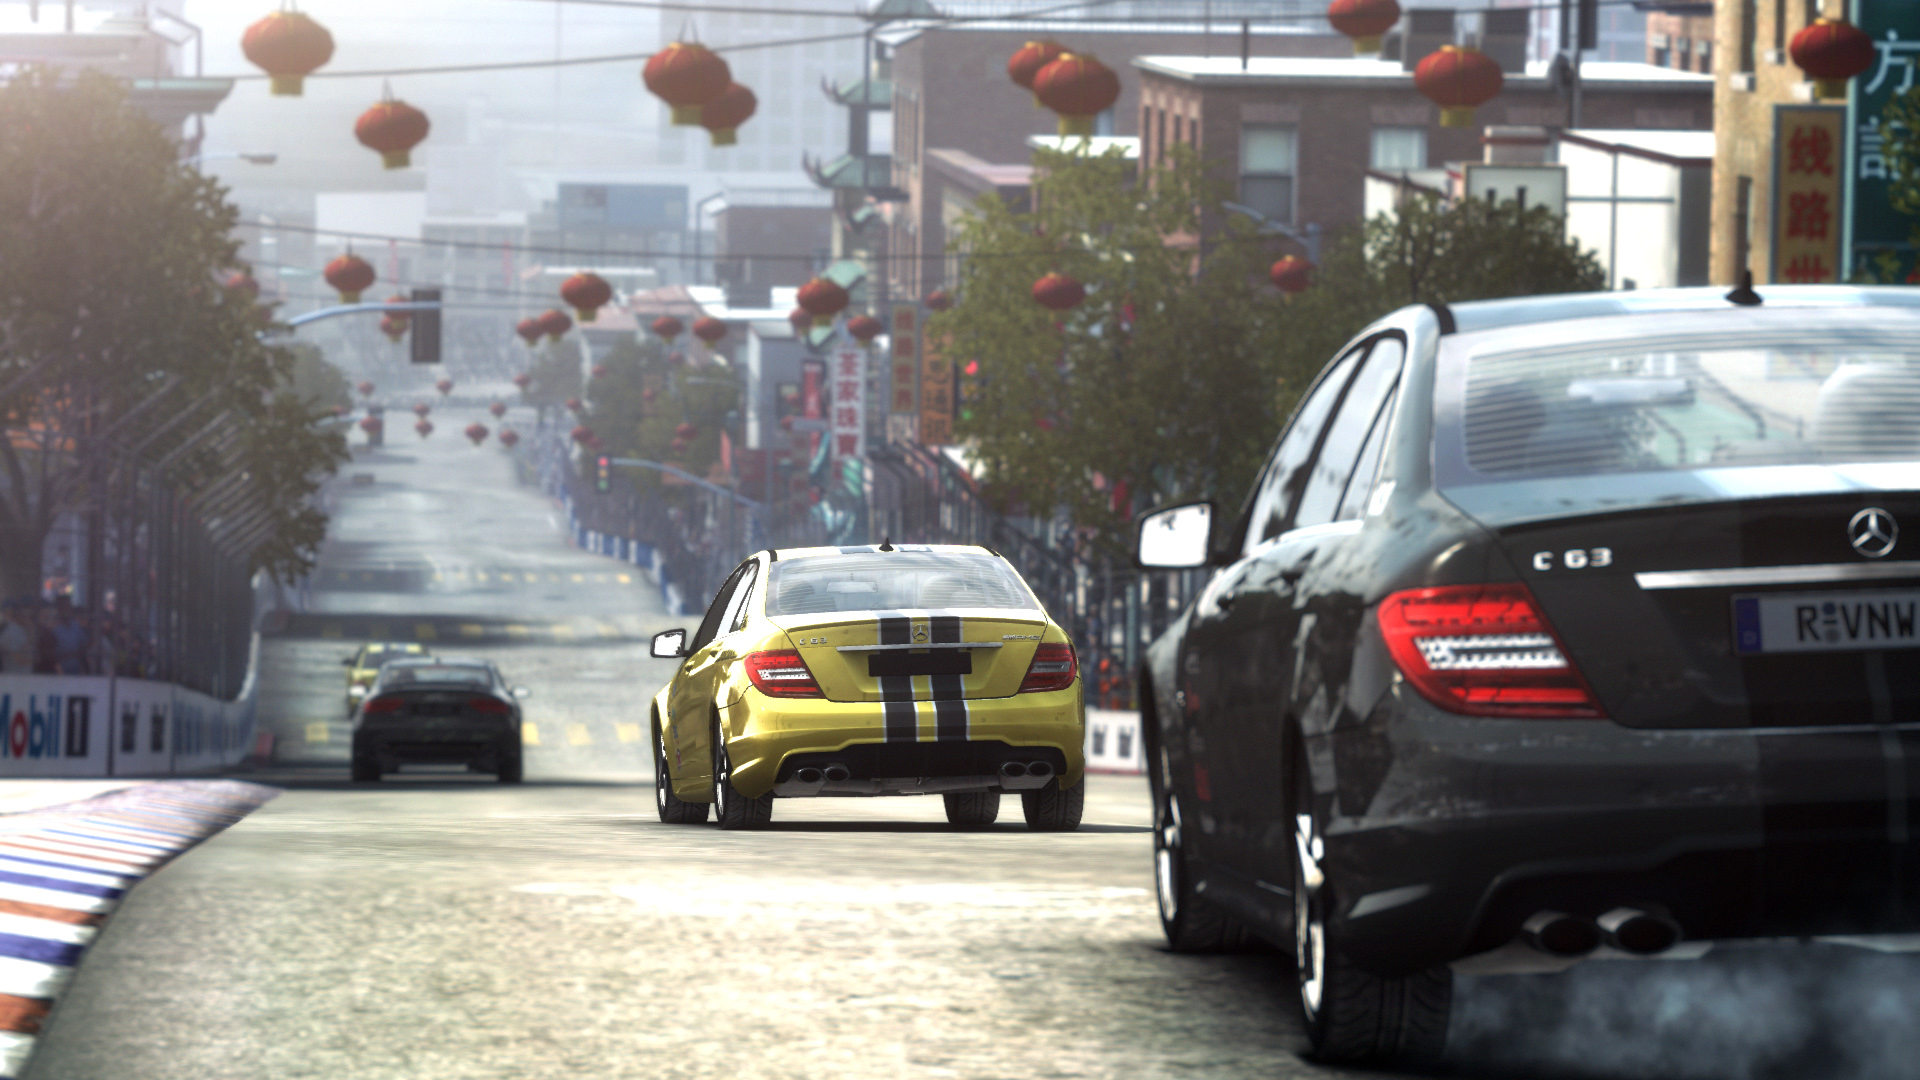 video game, grid autosport, grid